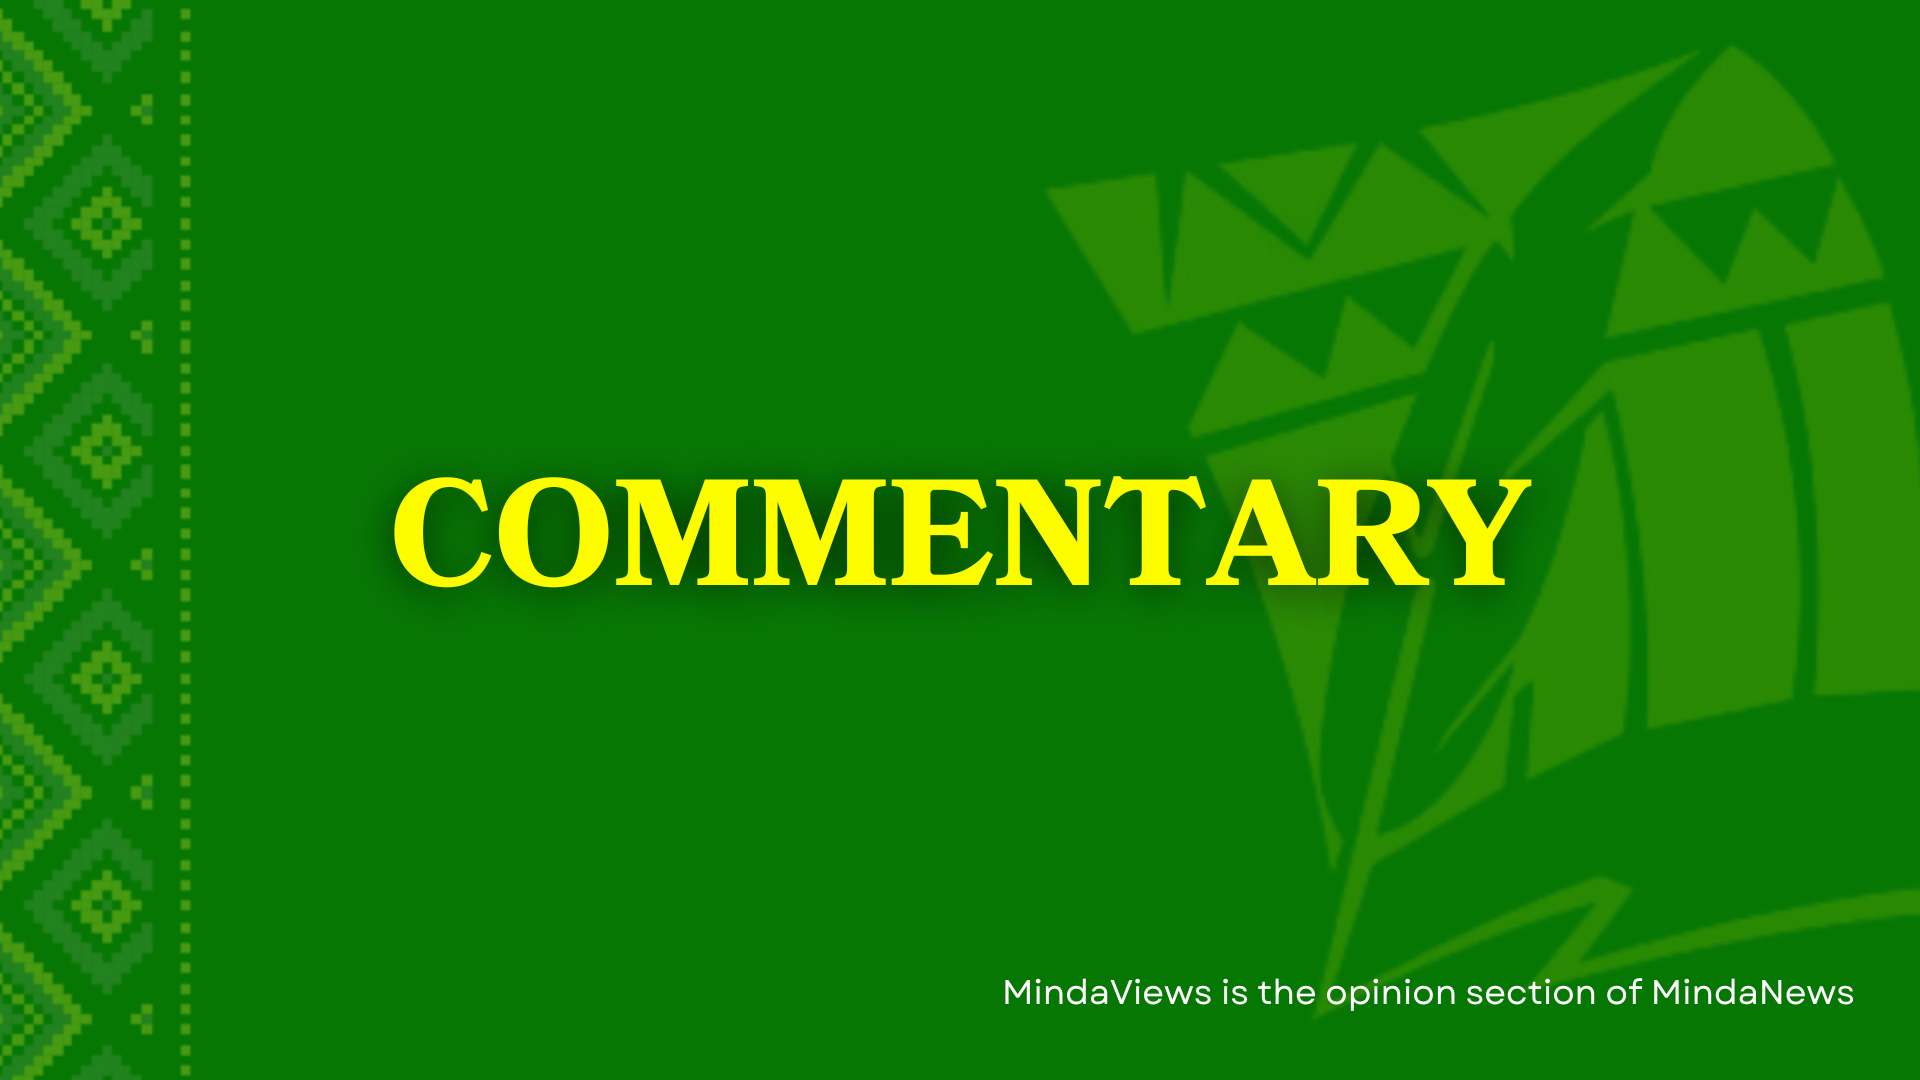 column commentary mindaviews